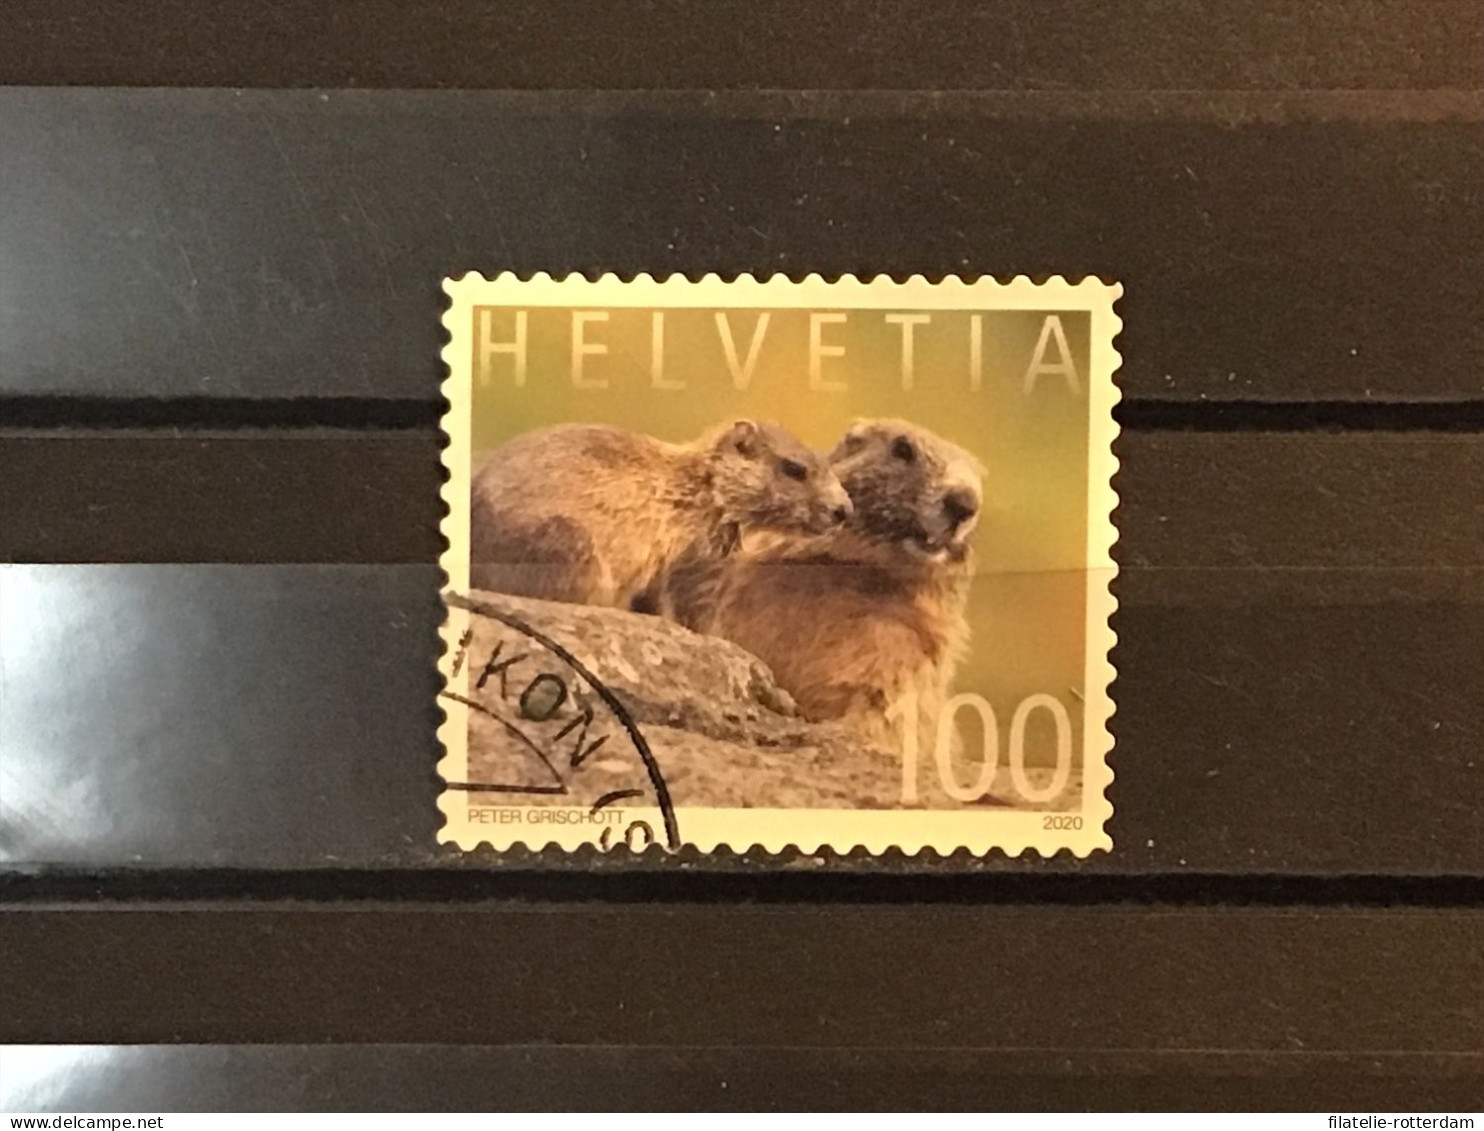 Switzerland / Zwitserland - Animal Families (100) 2020 - Used Stamps